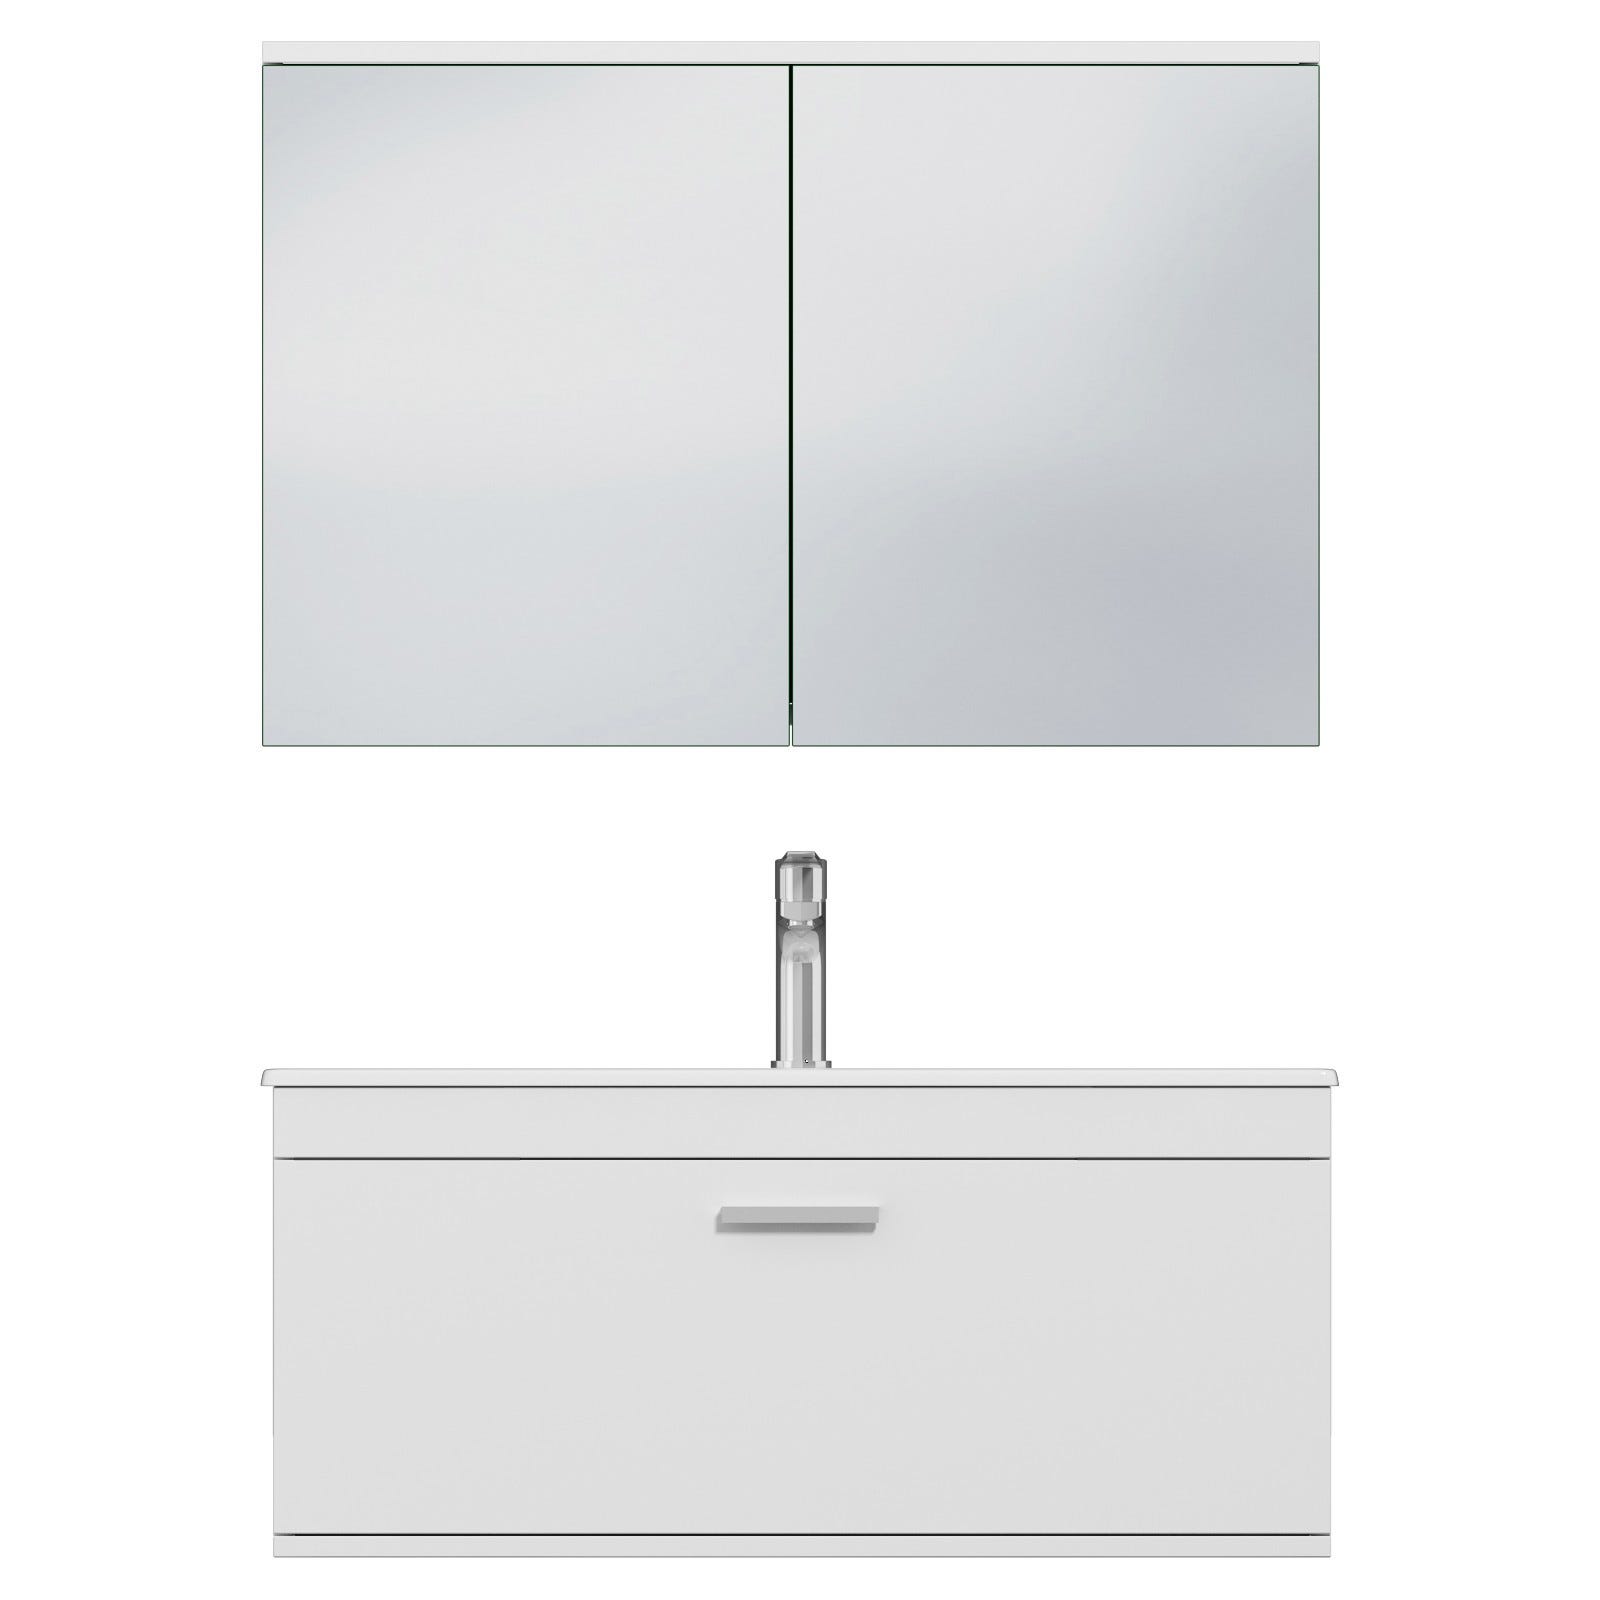 RUBITE Meuble salle de bain simple vasque 1 tiroir blanc largeur 100 cm + miroir armoire 4